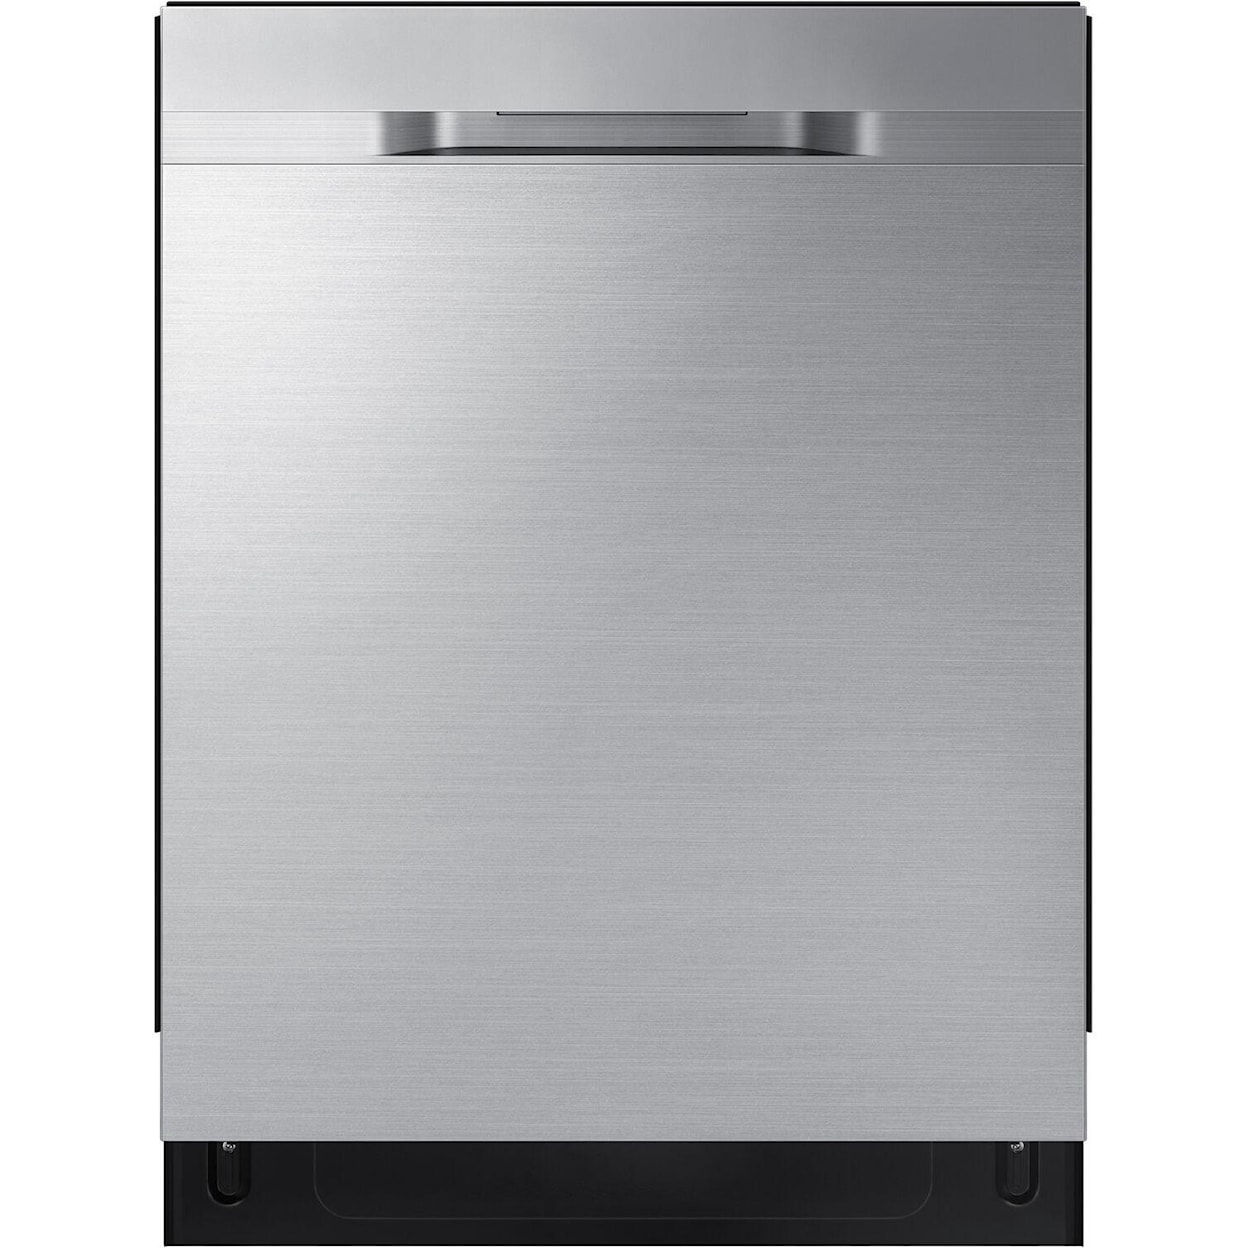 Samsung Appliances DISHWASHERS - SAMSUNG 24 inch built-in dishwasher